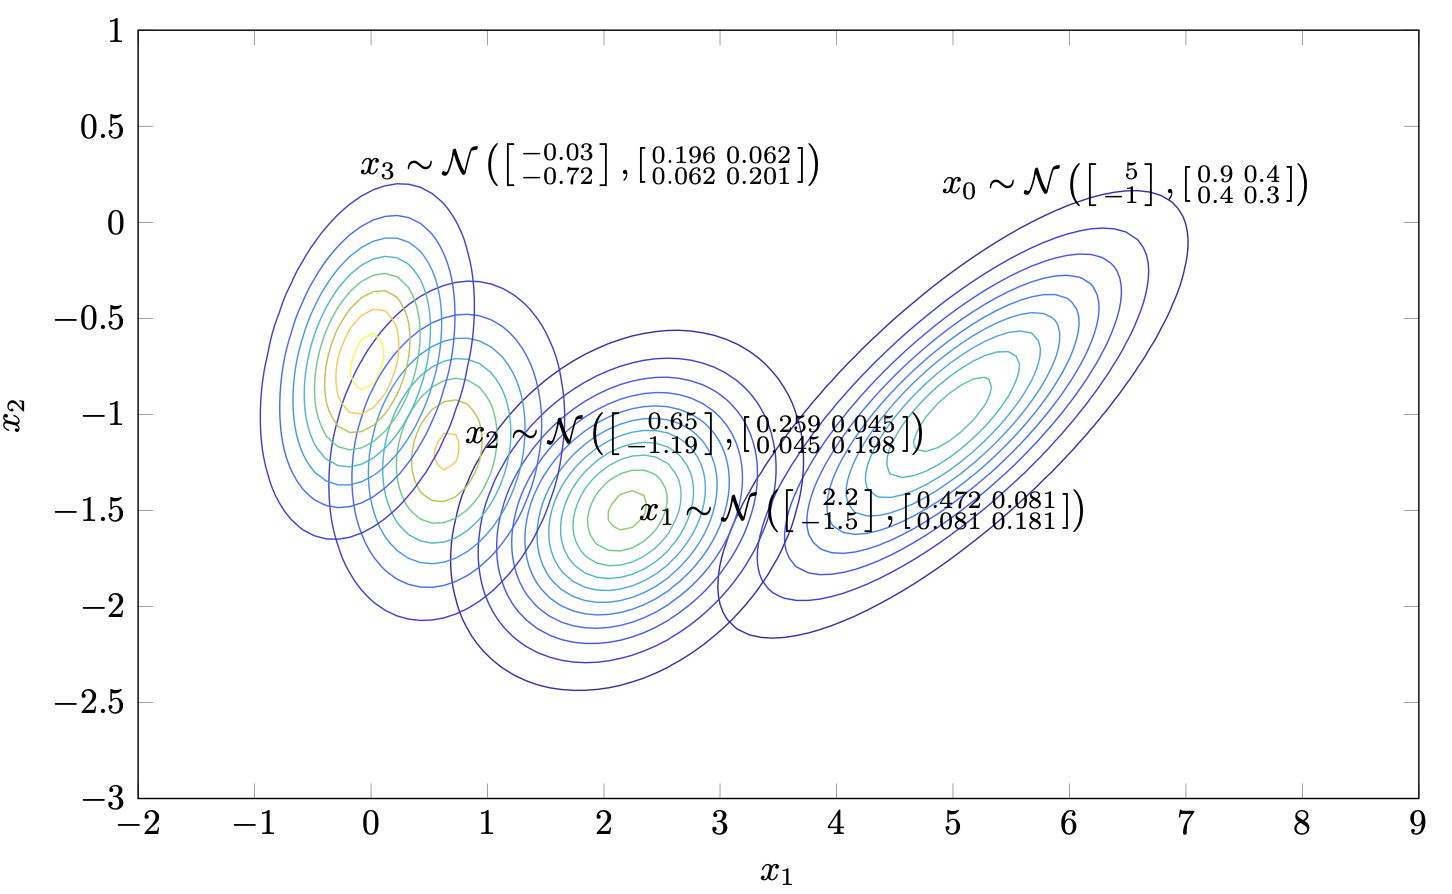 Evolution of states of the Gauss-Markov model